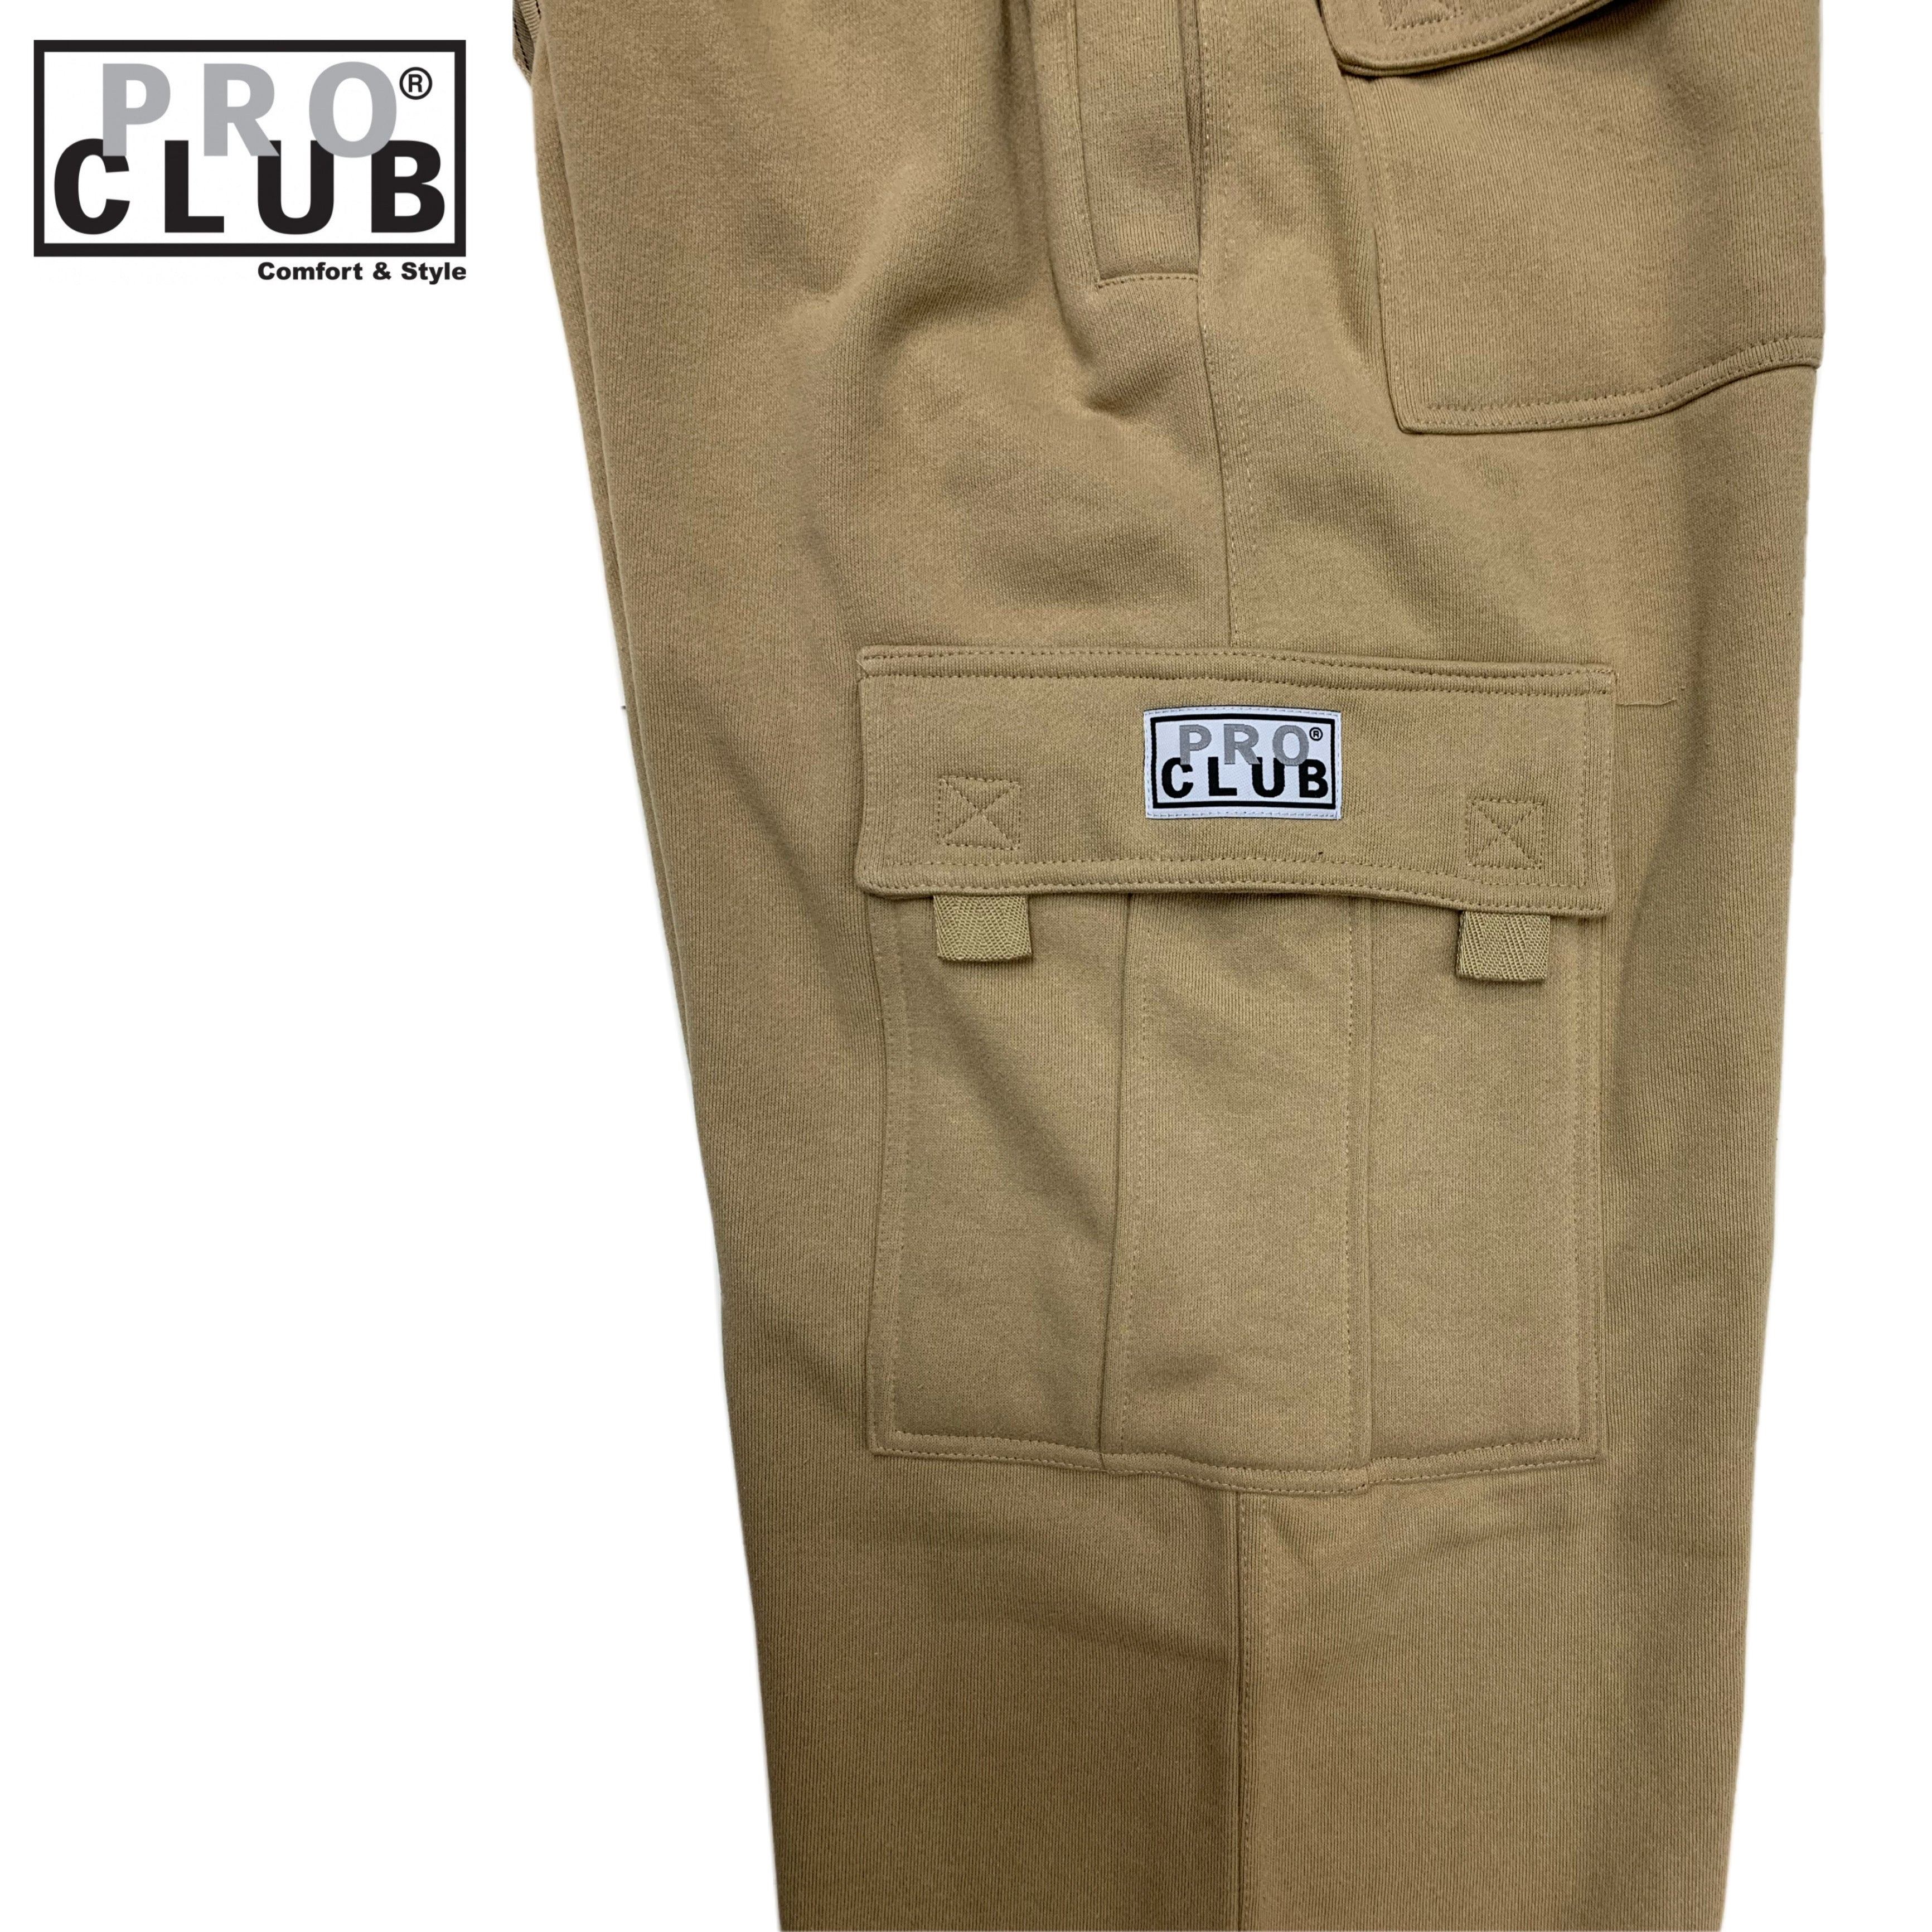 Pro Club Cargo Sweatpants